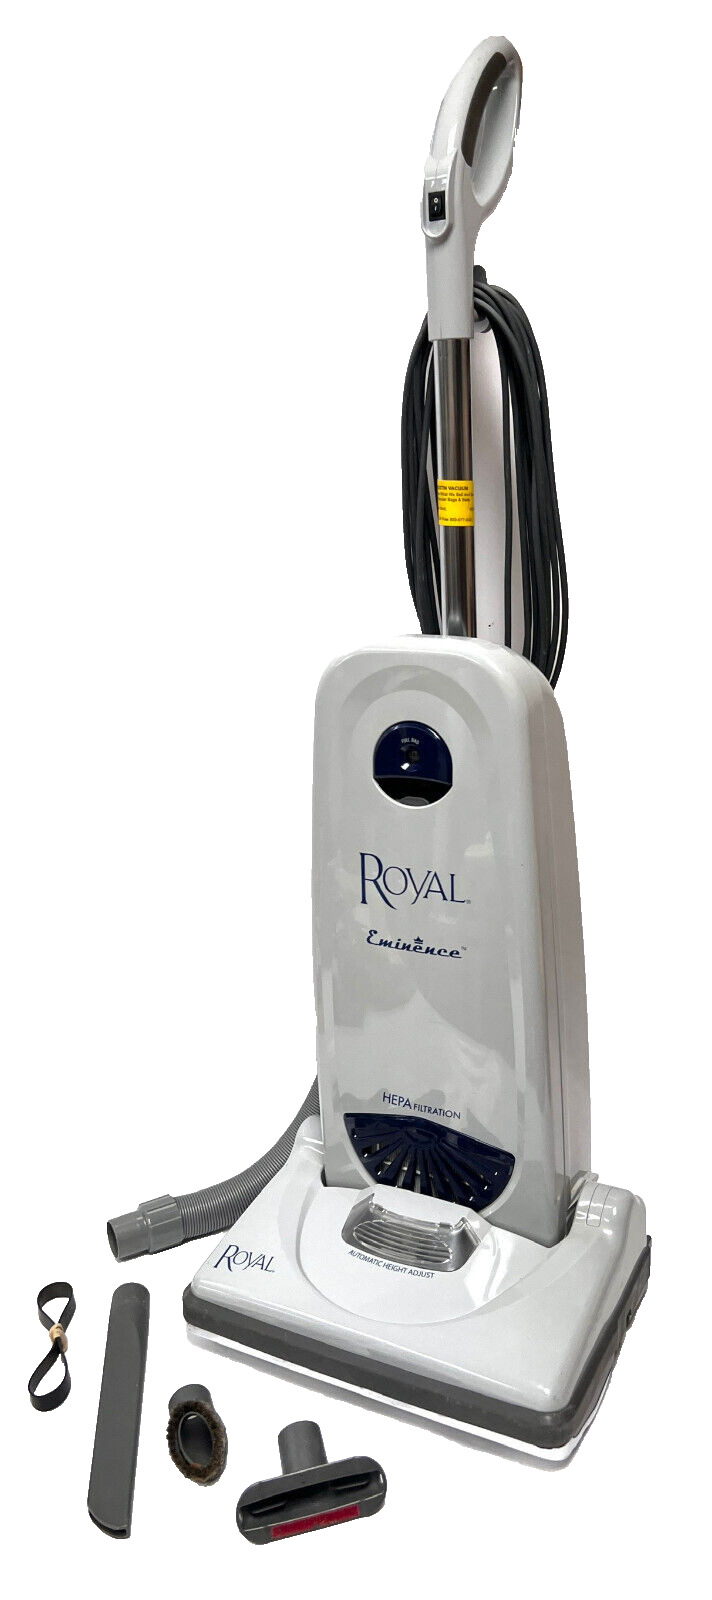 ROYAL Eminence HEPA Upright Vacuum Cleaner, 15\